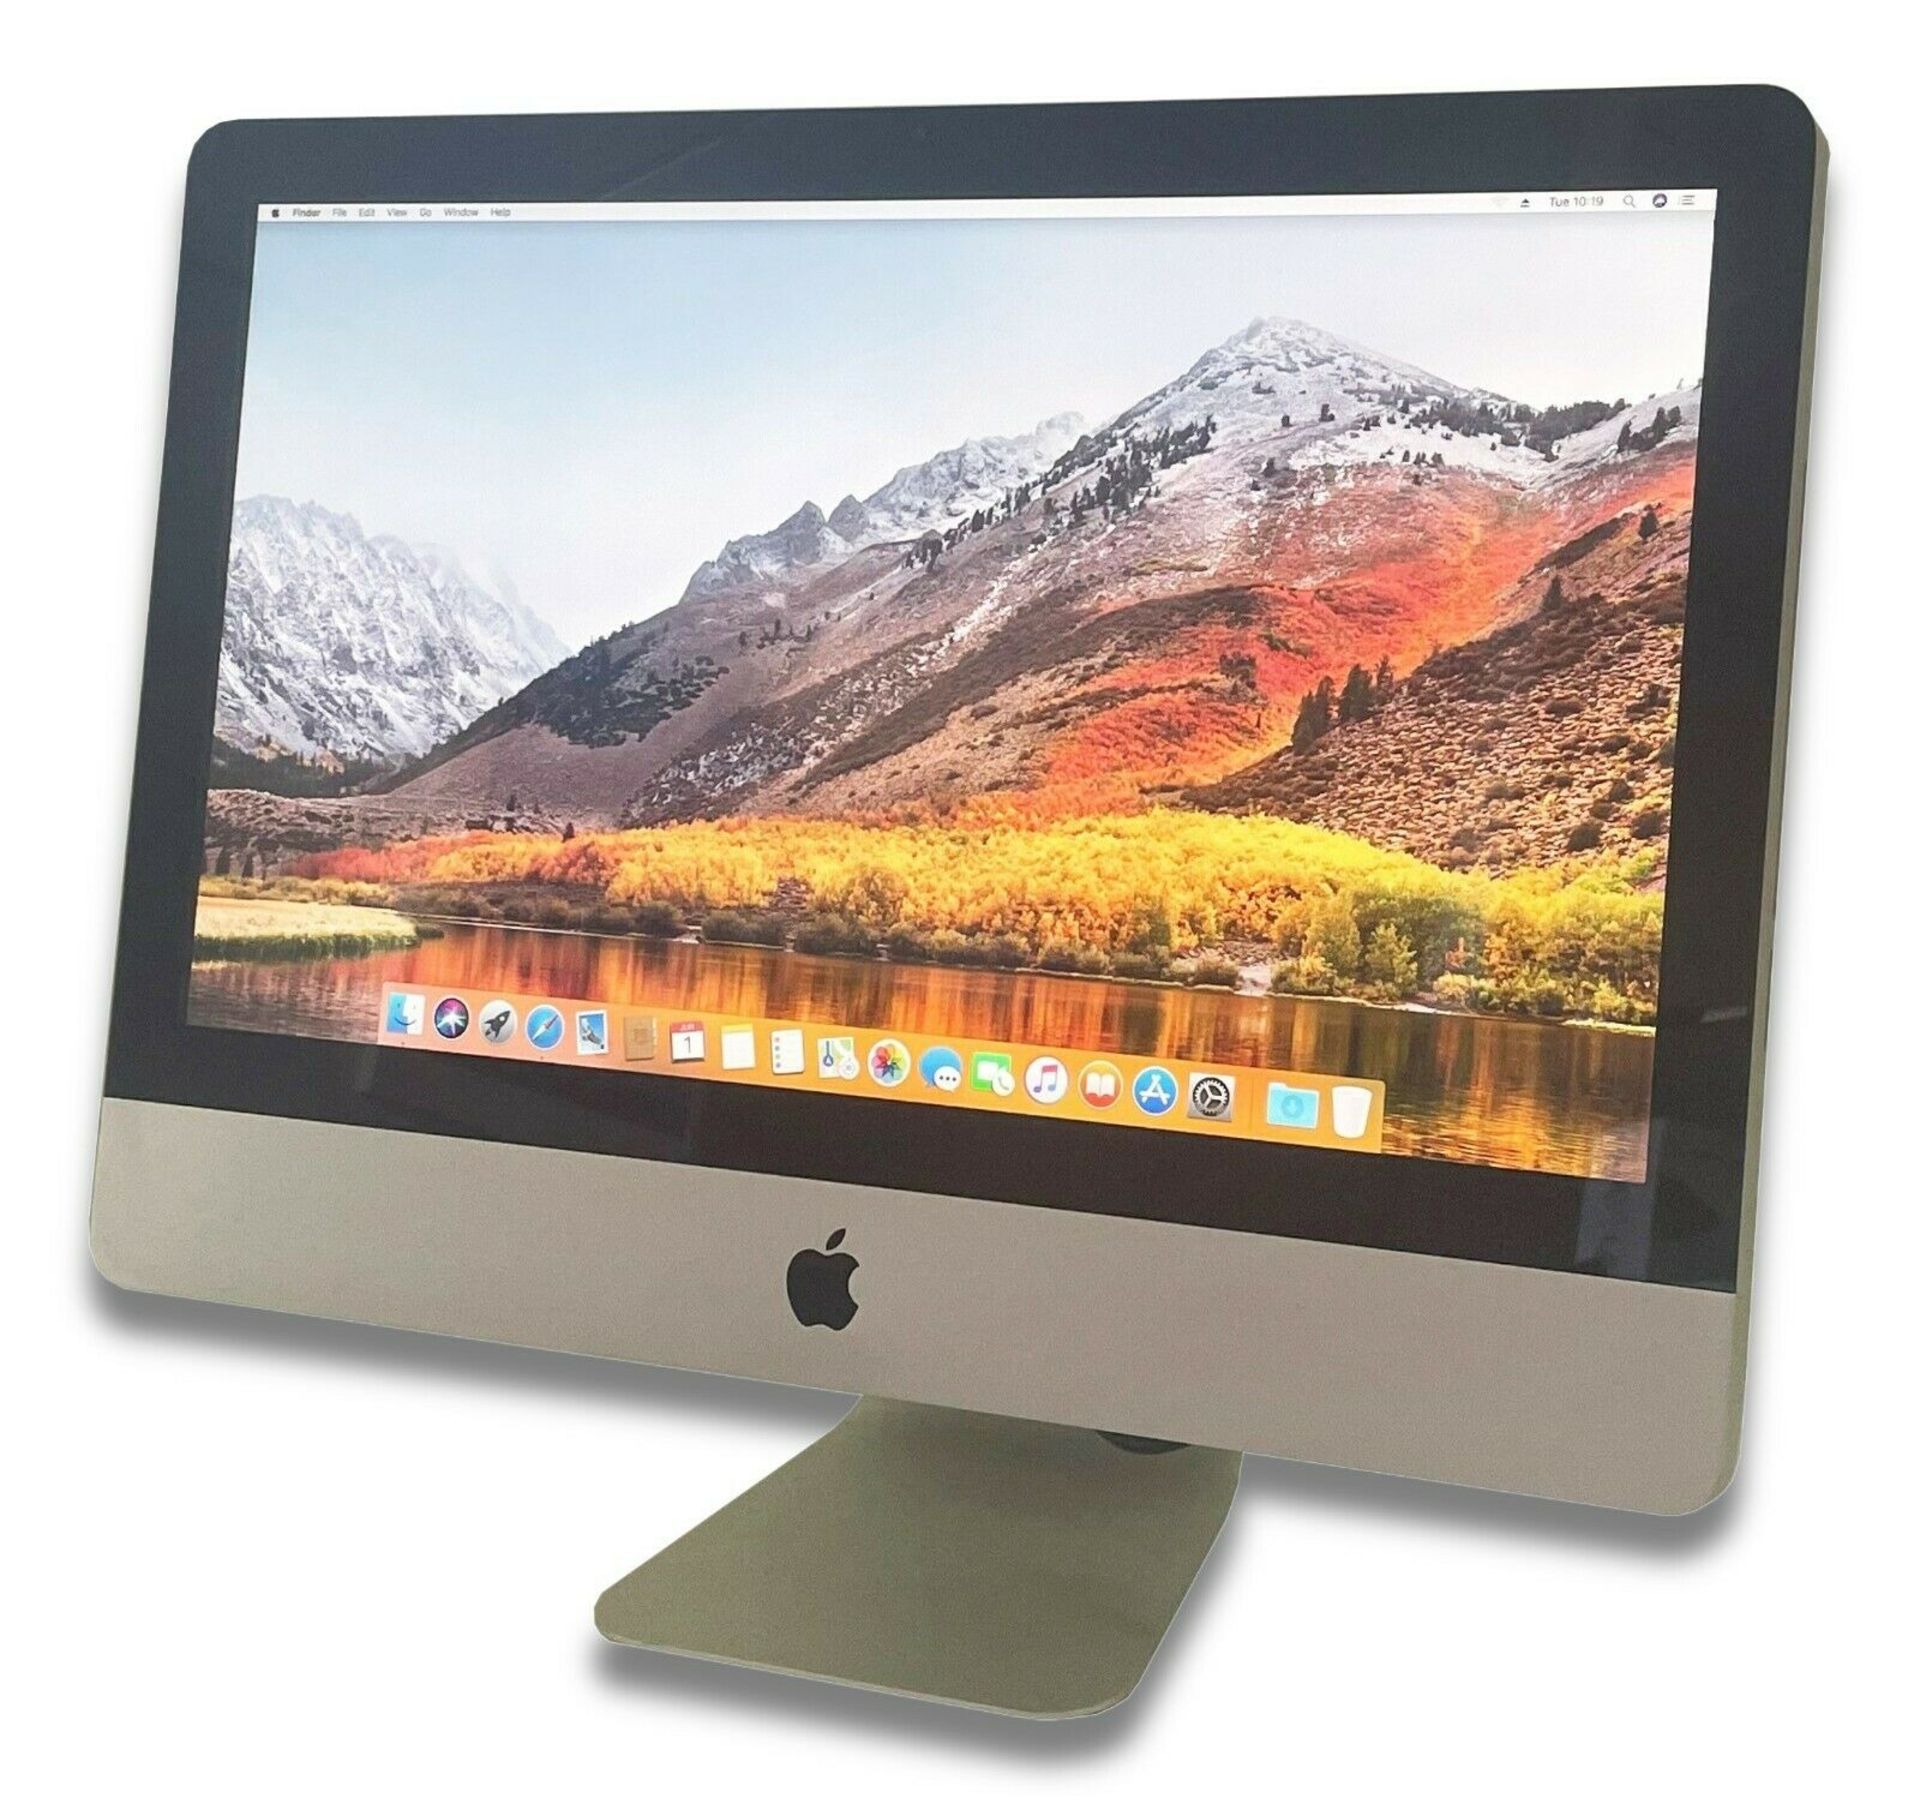 Apple iMac 21.5” OS X High Sierra Intel Core i5 4GB Memory 500GB HD Radeon WiFi Bluetooth Office - Image 2 of 4